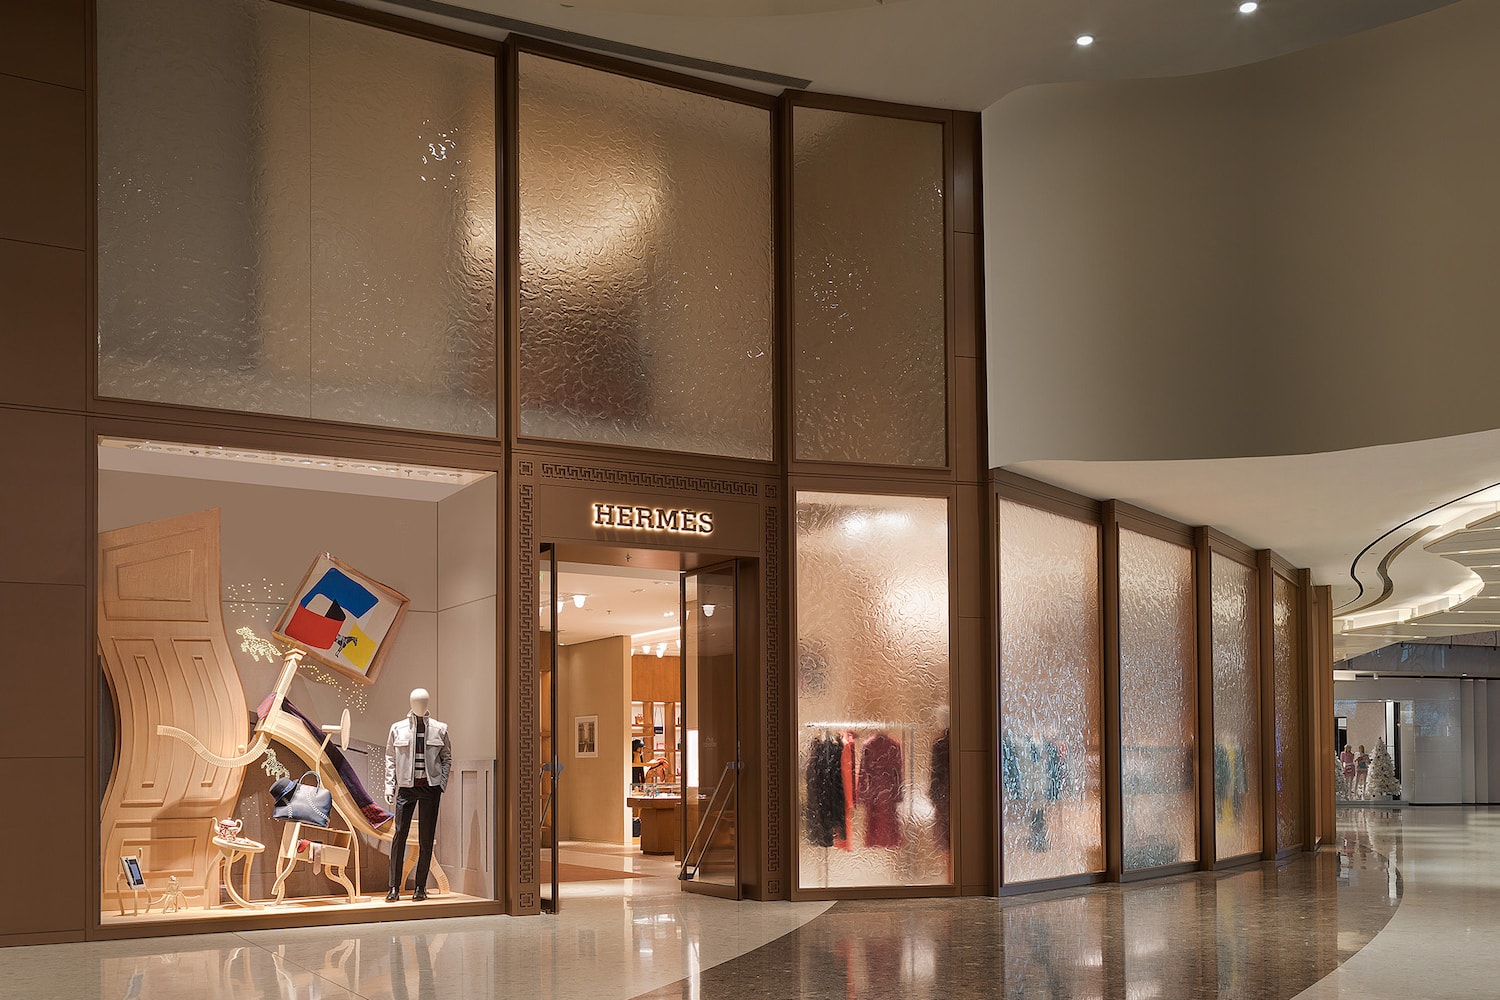 Hermès 上海國際金融中心專賣店為拓店揭幕推出別註單品